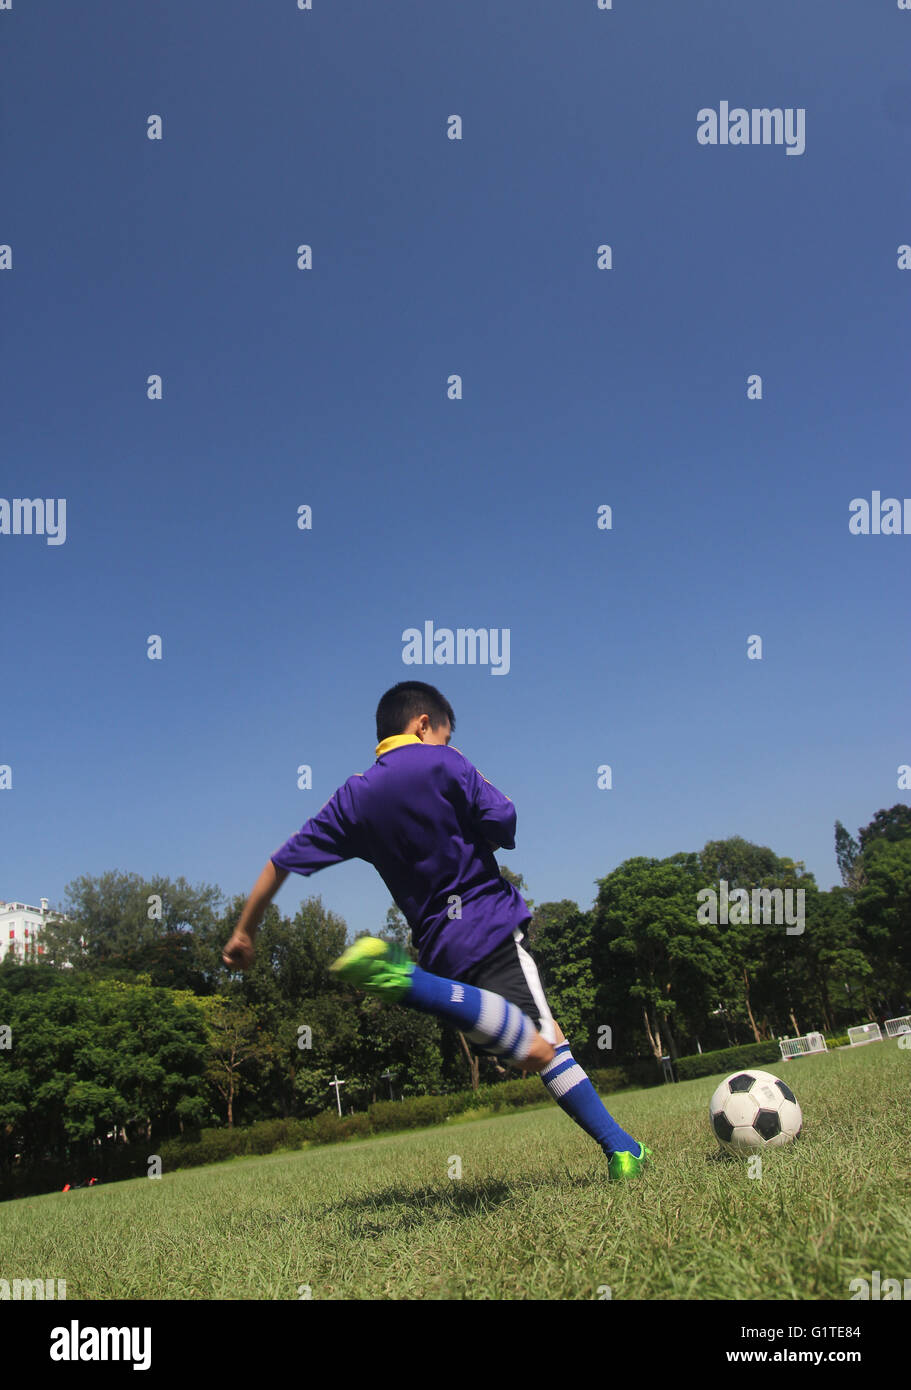 Un garçon jouer football buteur haute puissance shoot shoot kick Banque D'Images